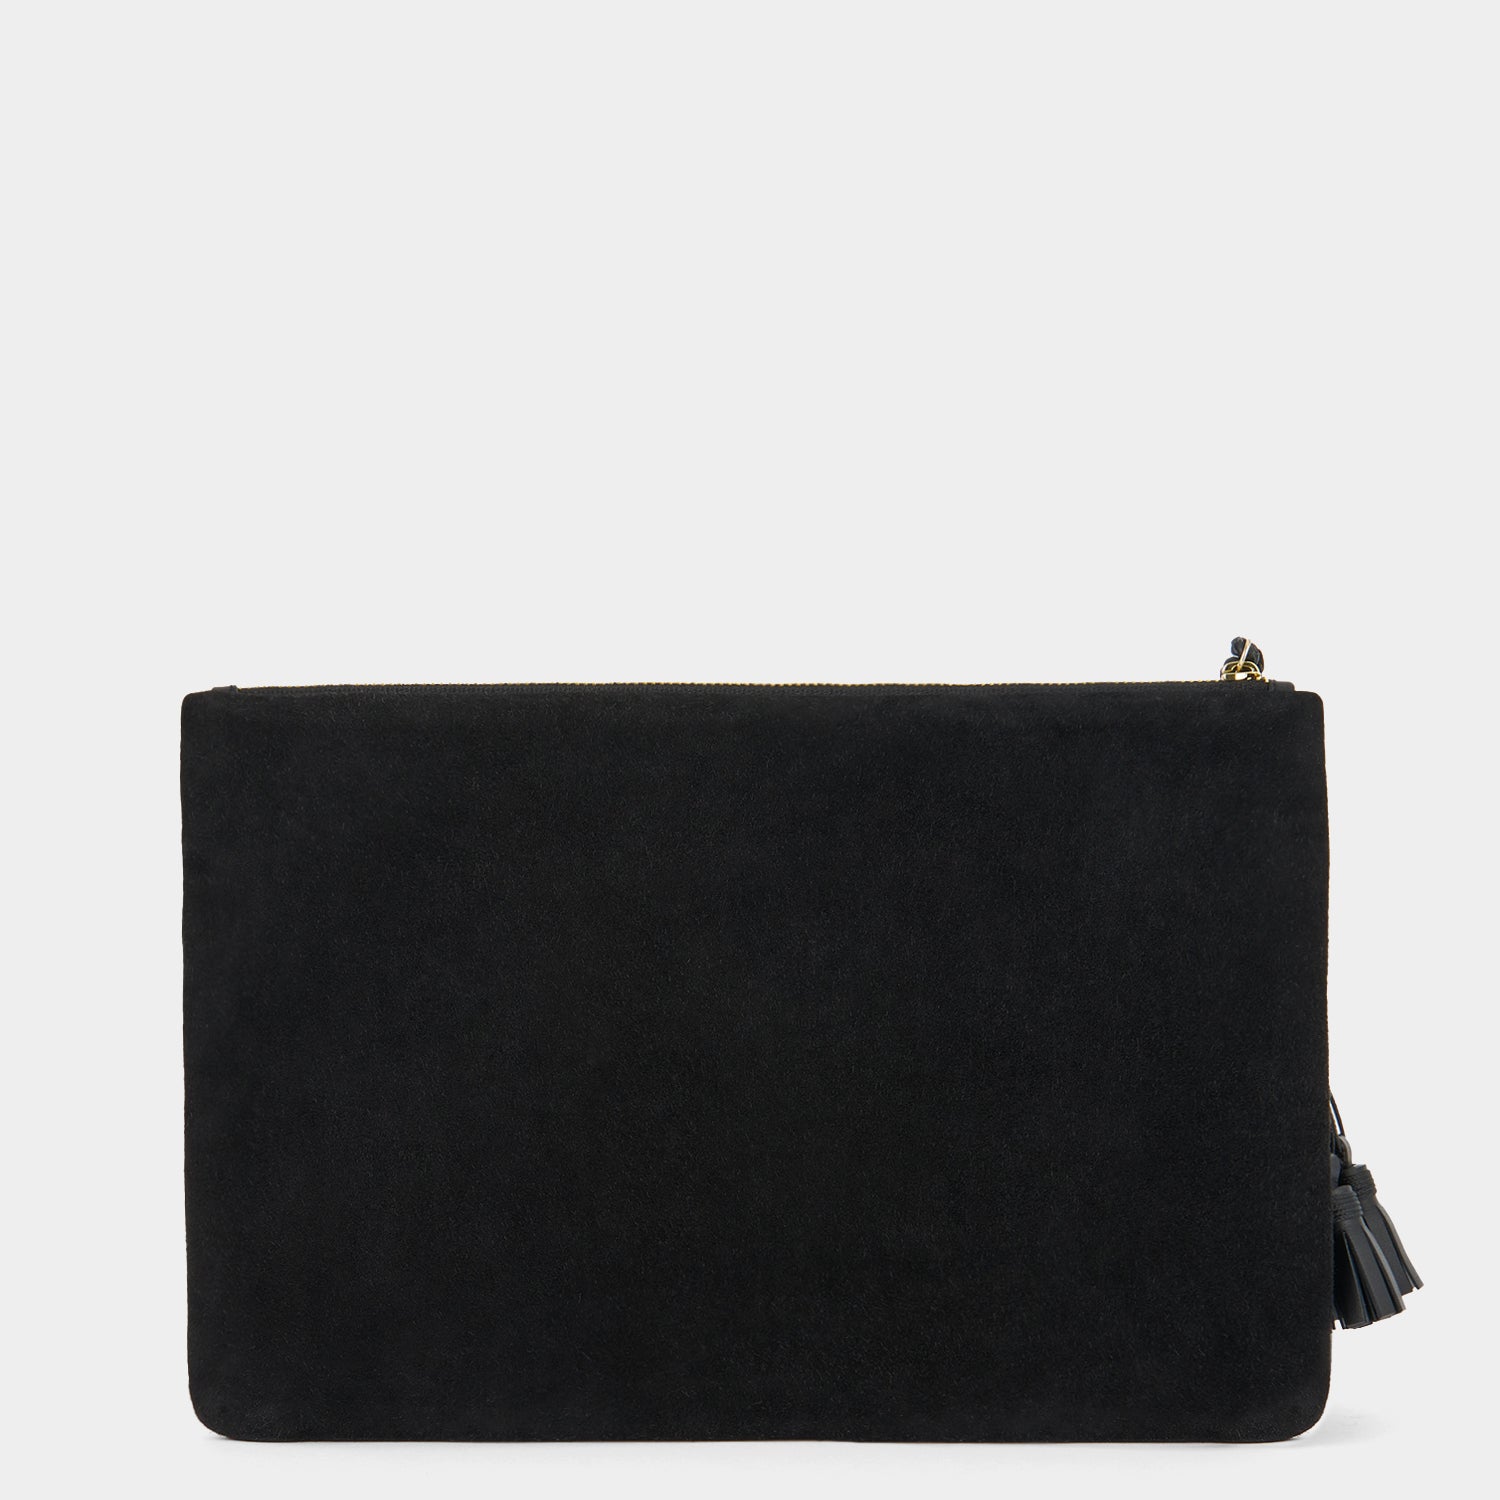 Vintage Bottega Venetia black suede clutch bag with bow motif and a bu